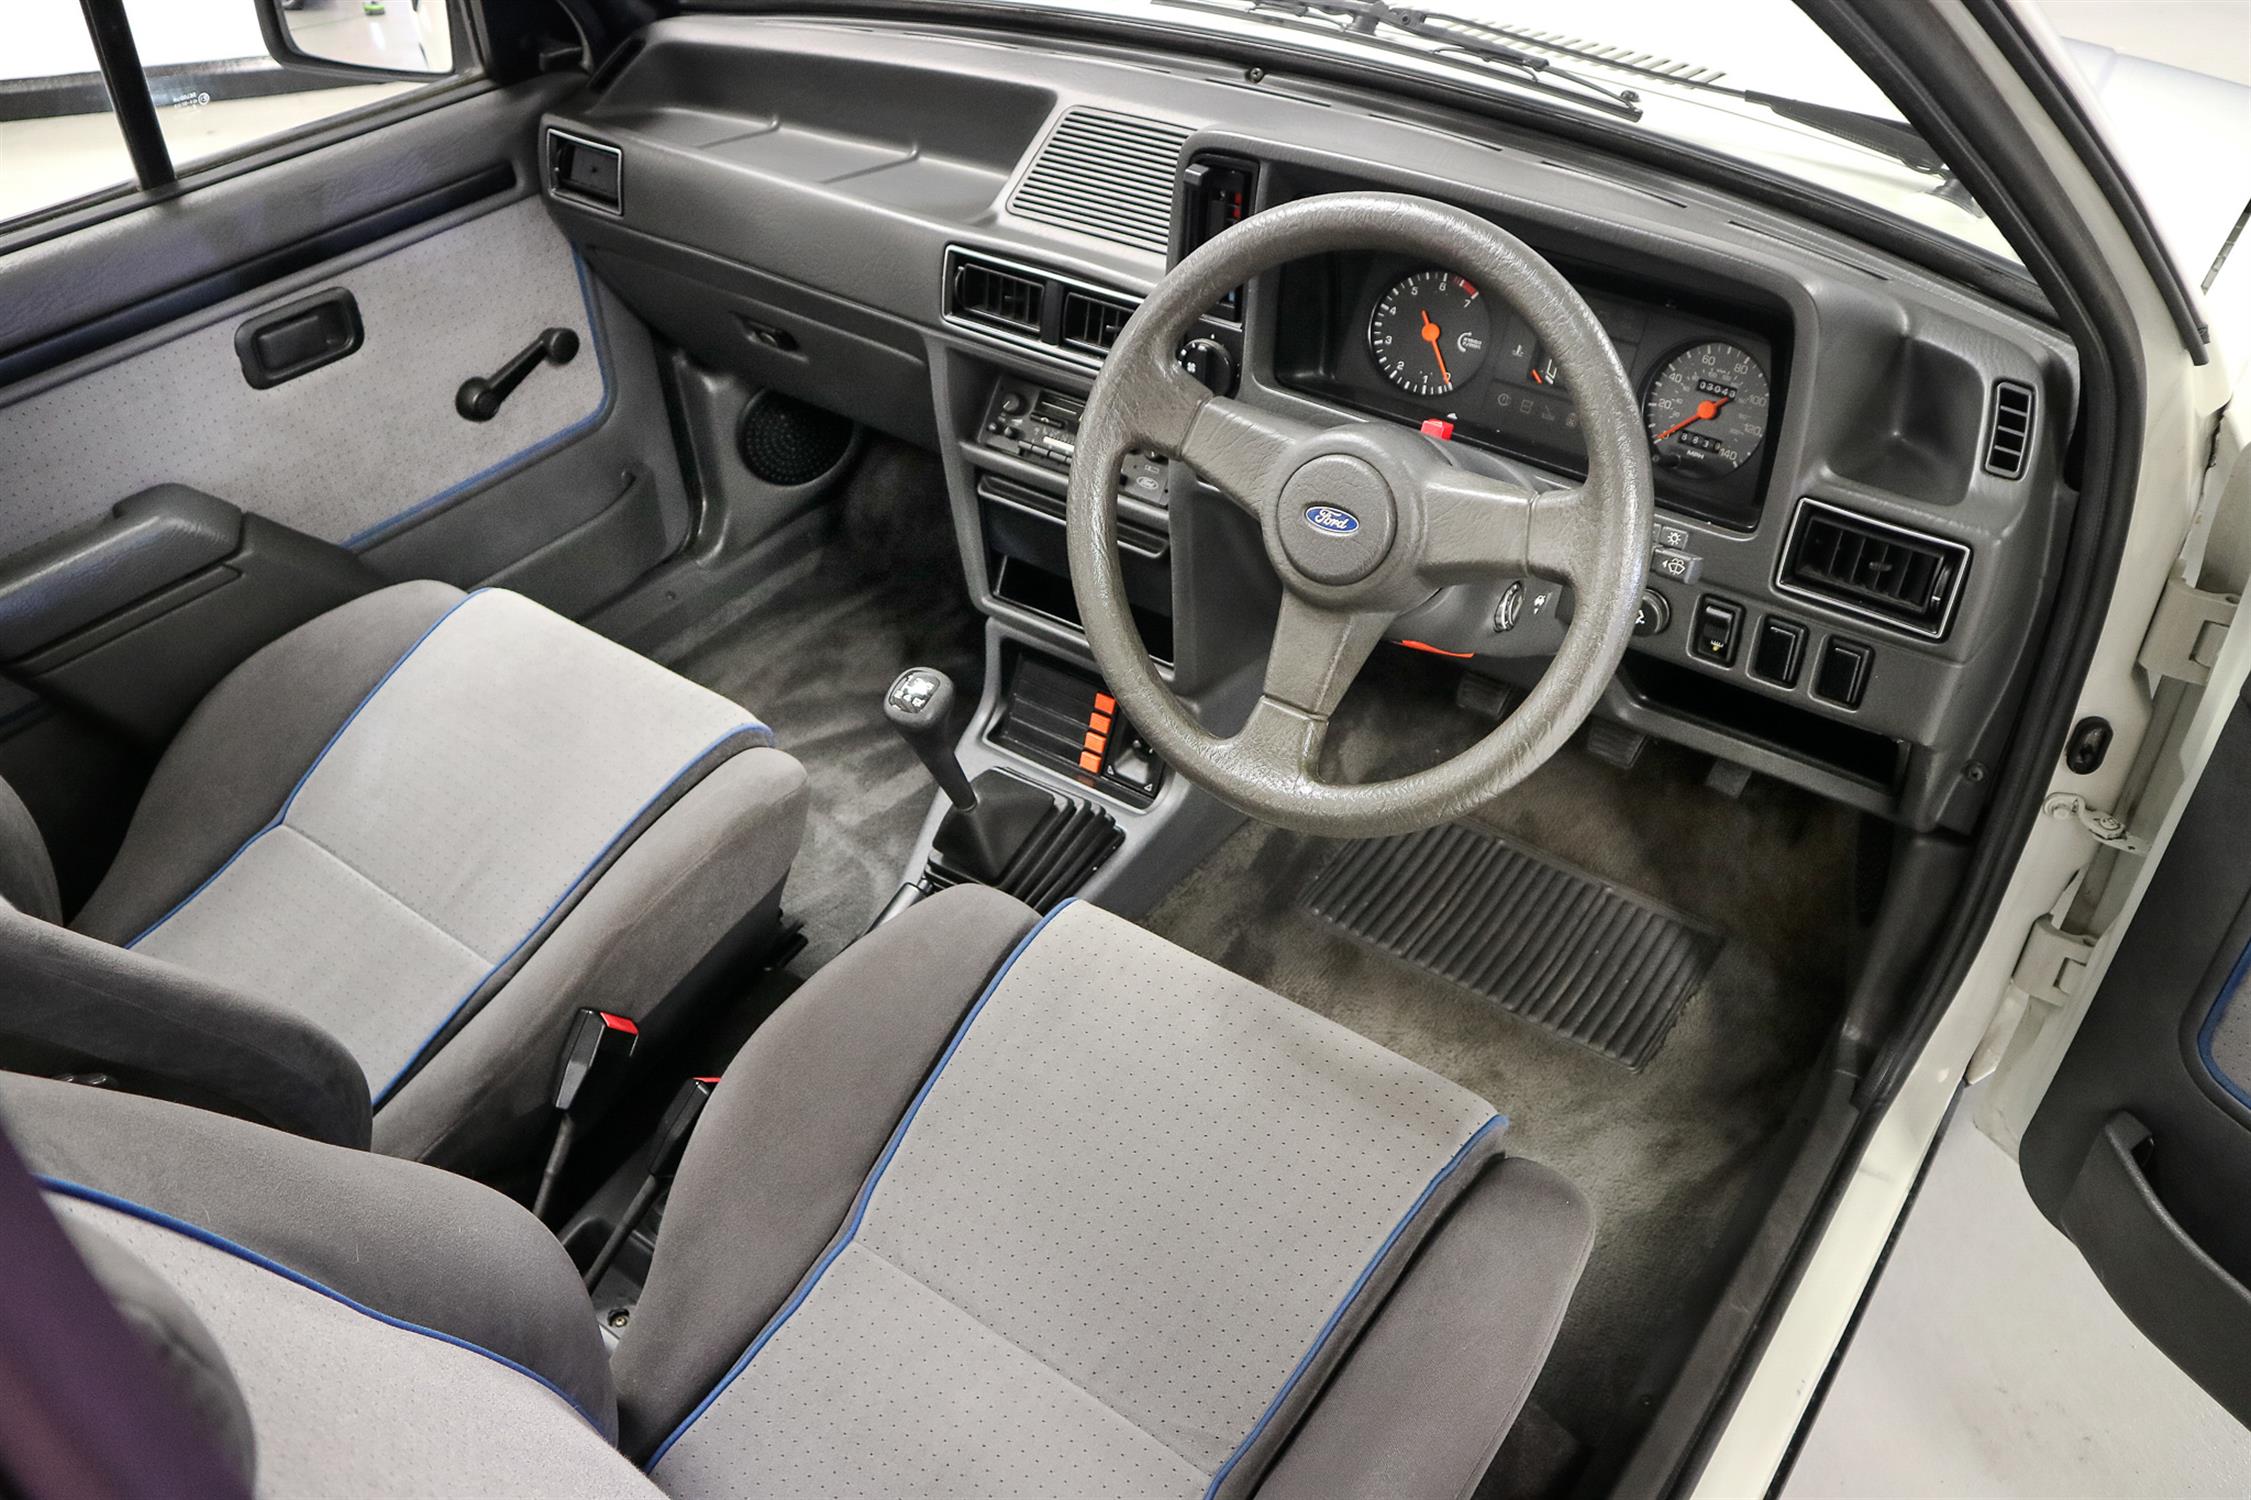 1985 Ford Escort 1.6i Cabriolet - Image 3 of 11